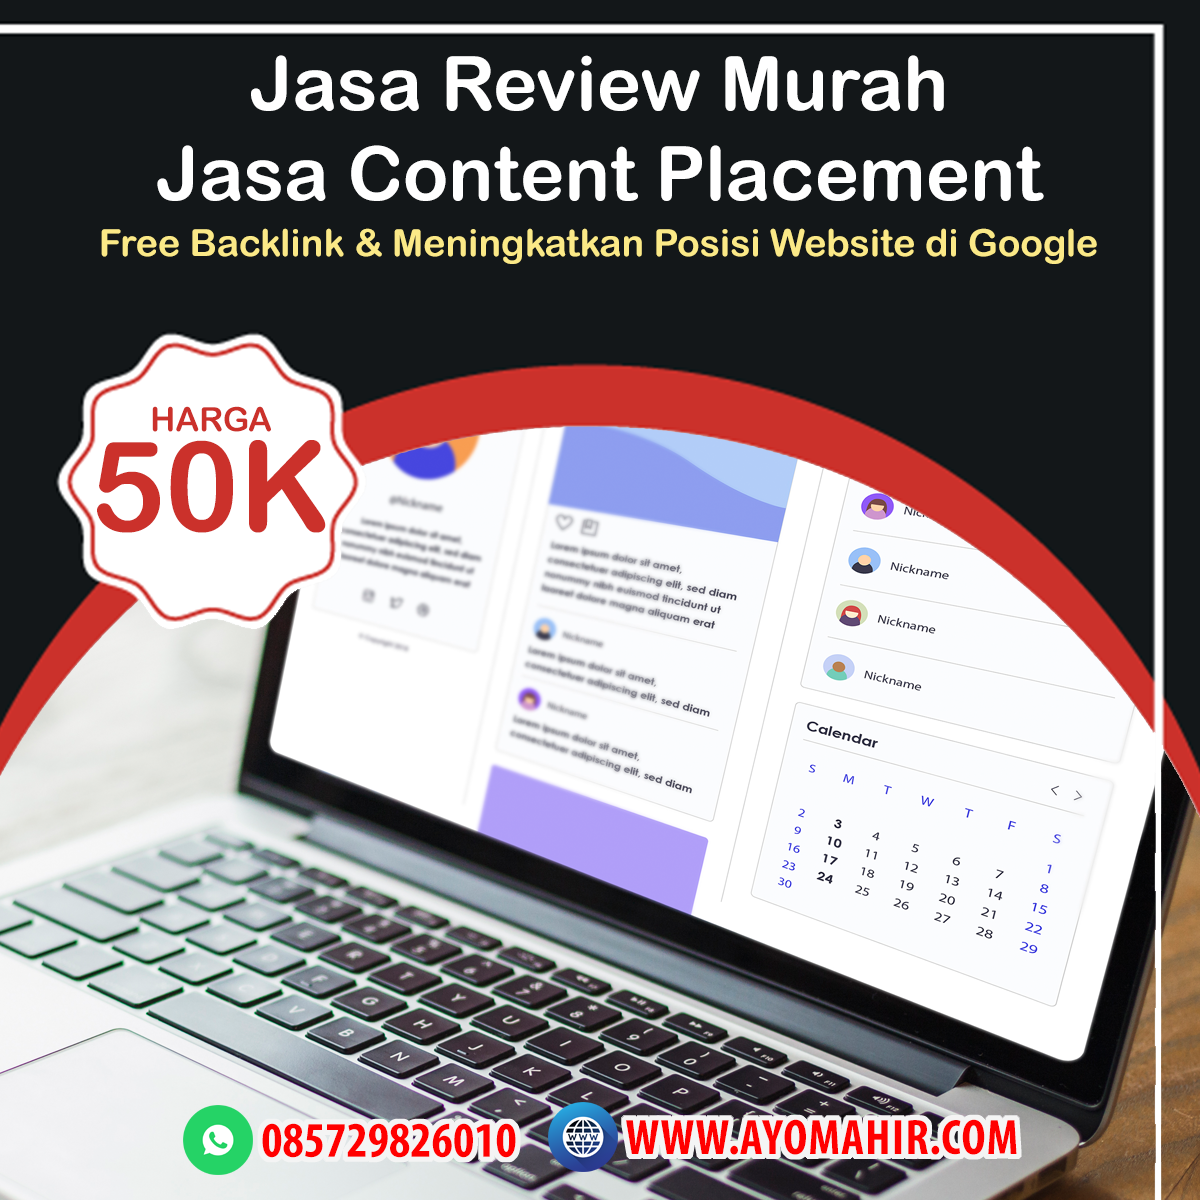 Jasa Review Murah, Jasa Content Placement Murah